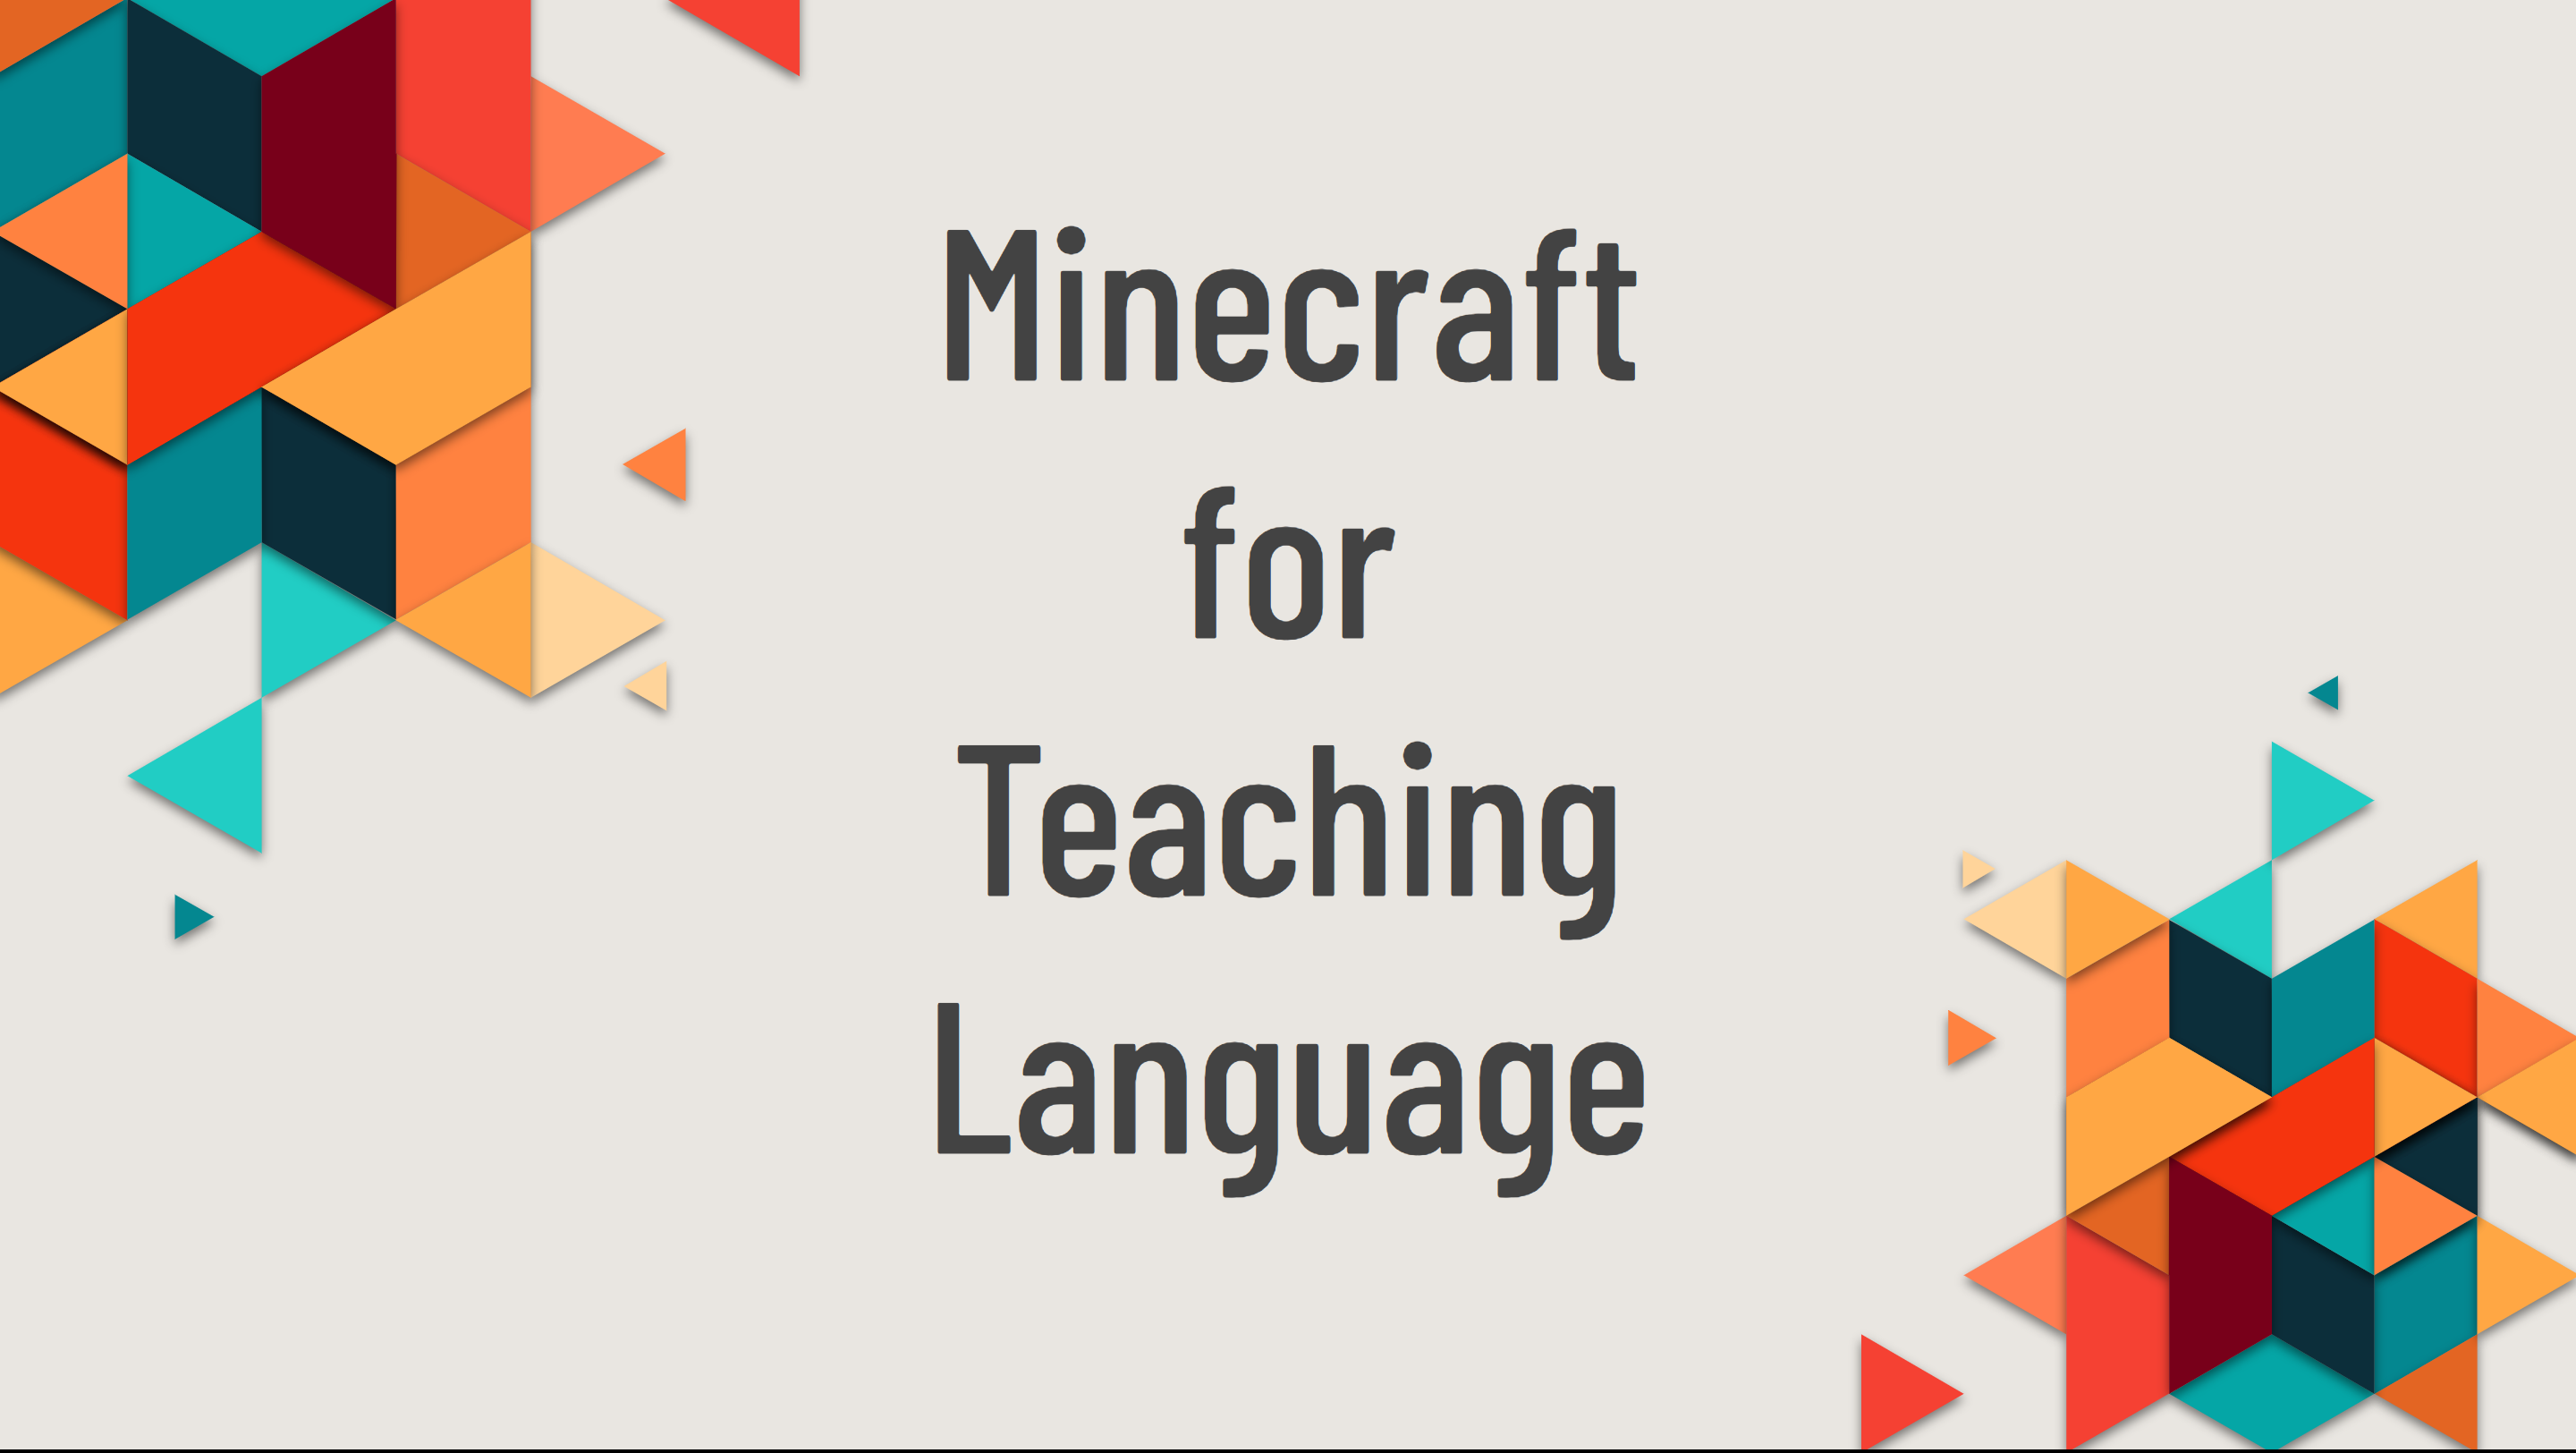 Minecraft language education